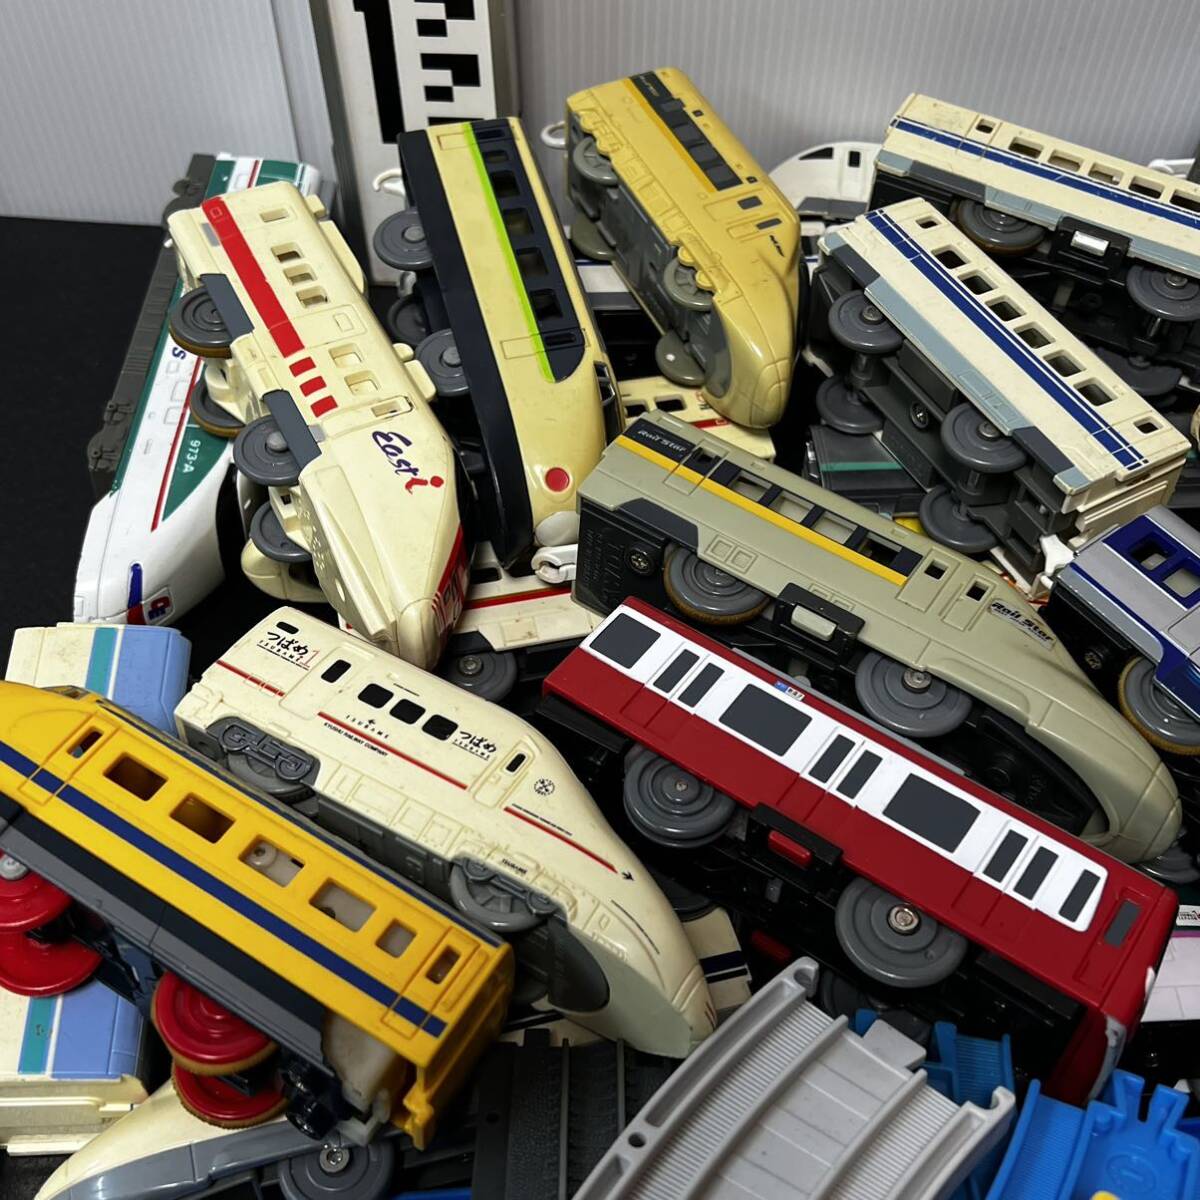  Junk продажа комплектом 6kg электропоезд Shinkansen TOMY Plarail и т.п. . машина Thomas и т.п. модель снятие деталей b3-66